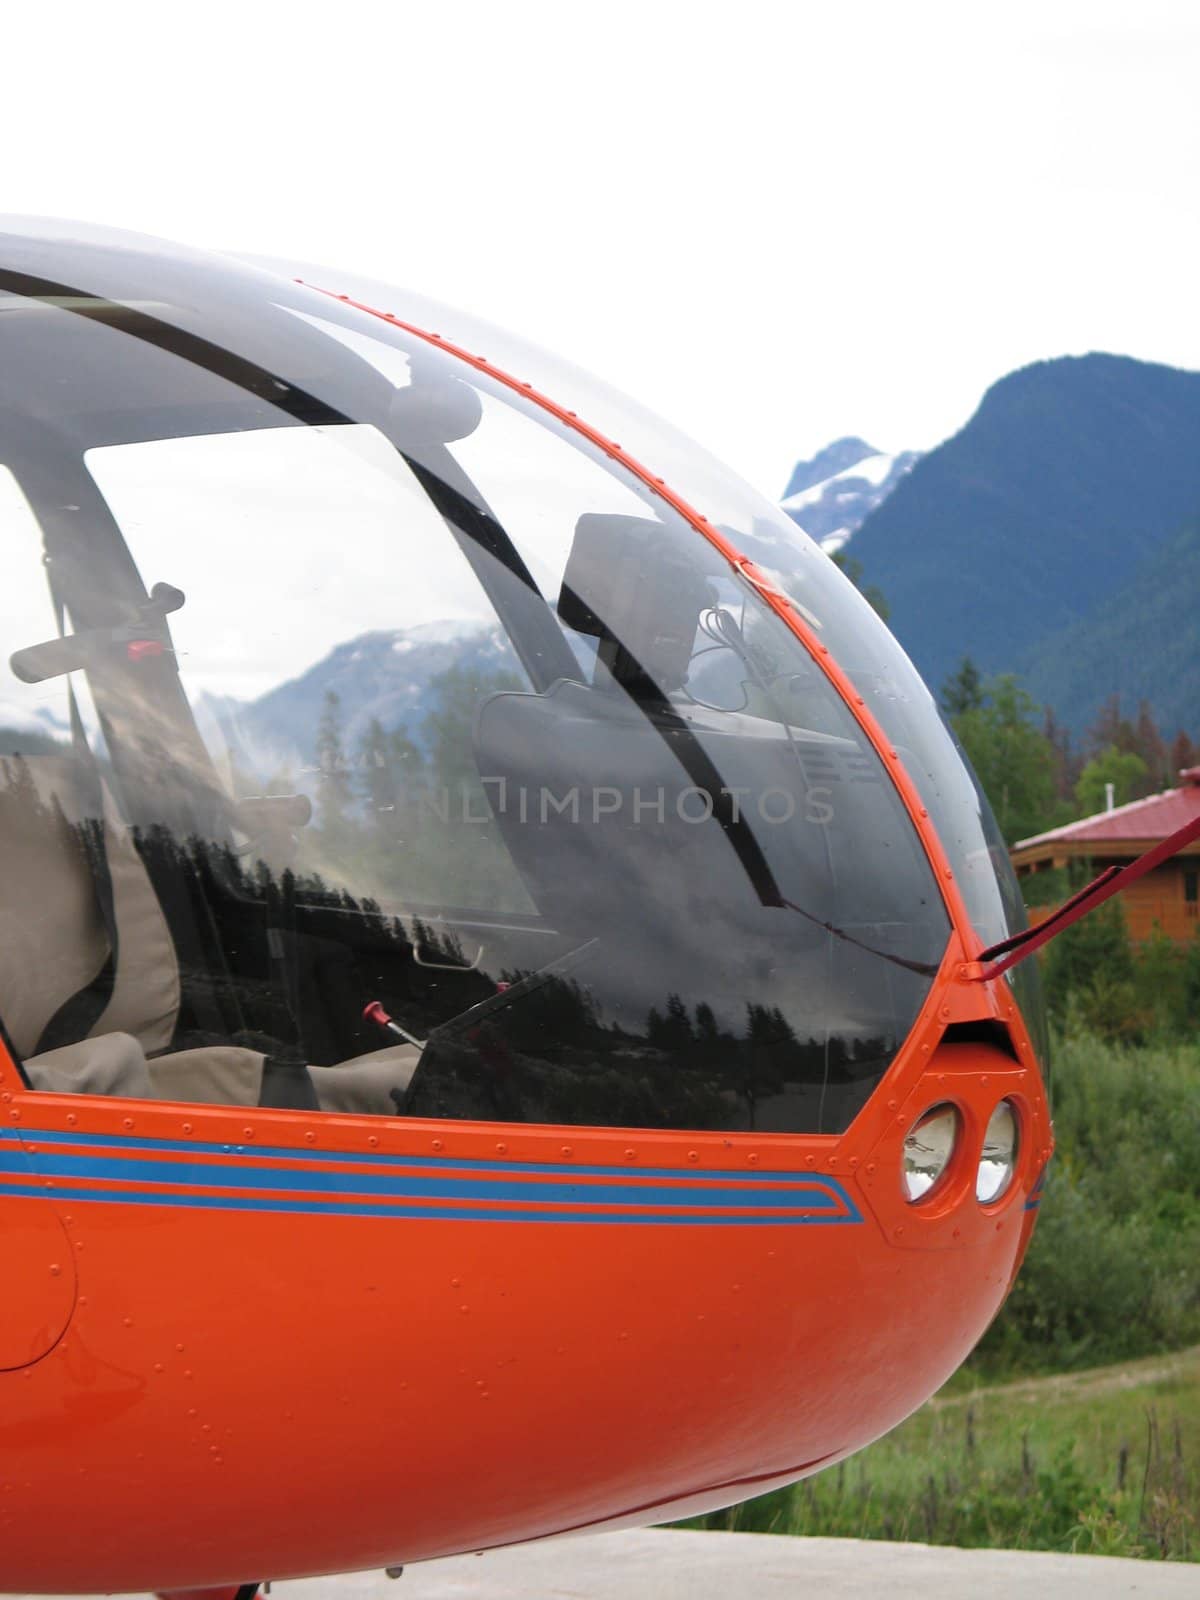 orange helicopter